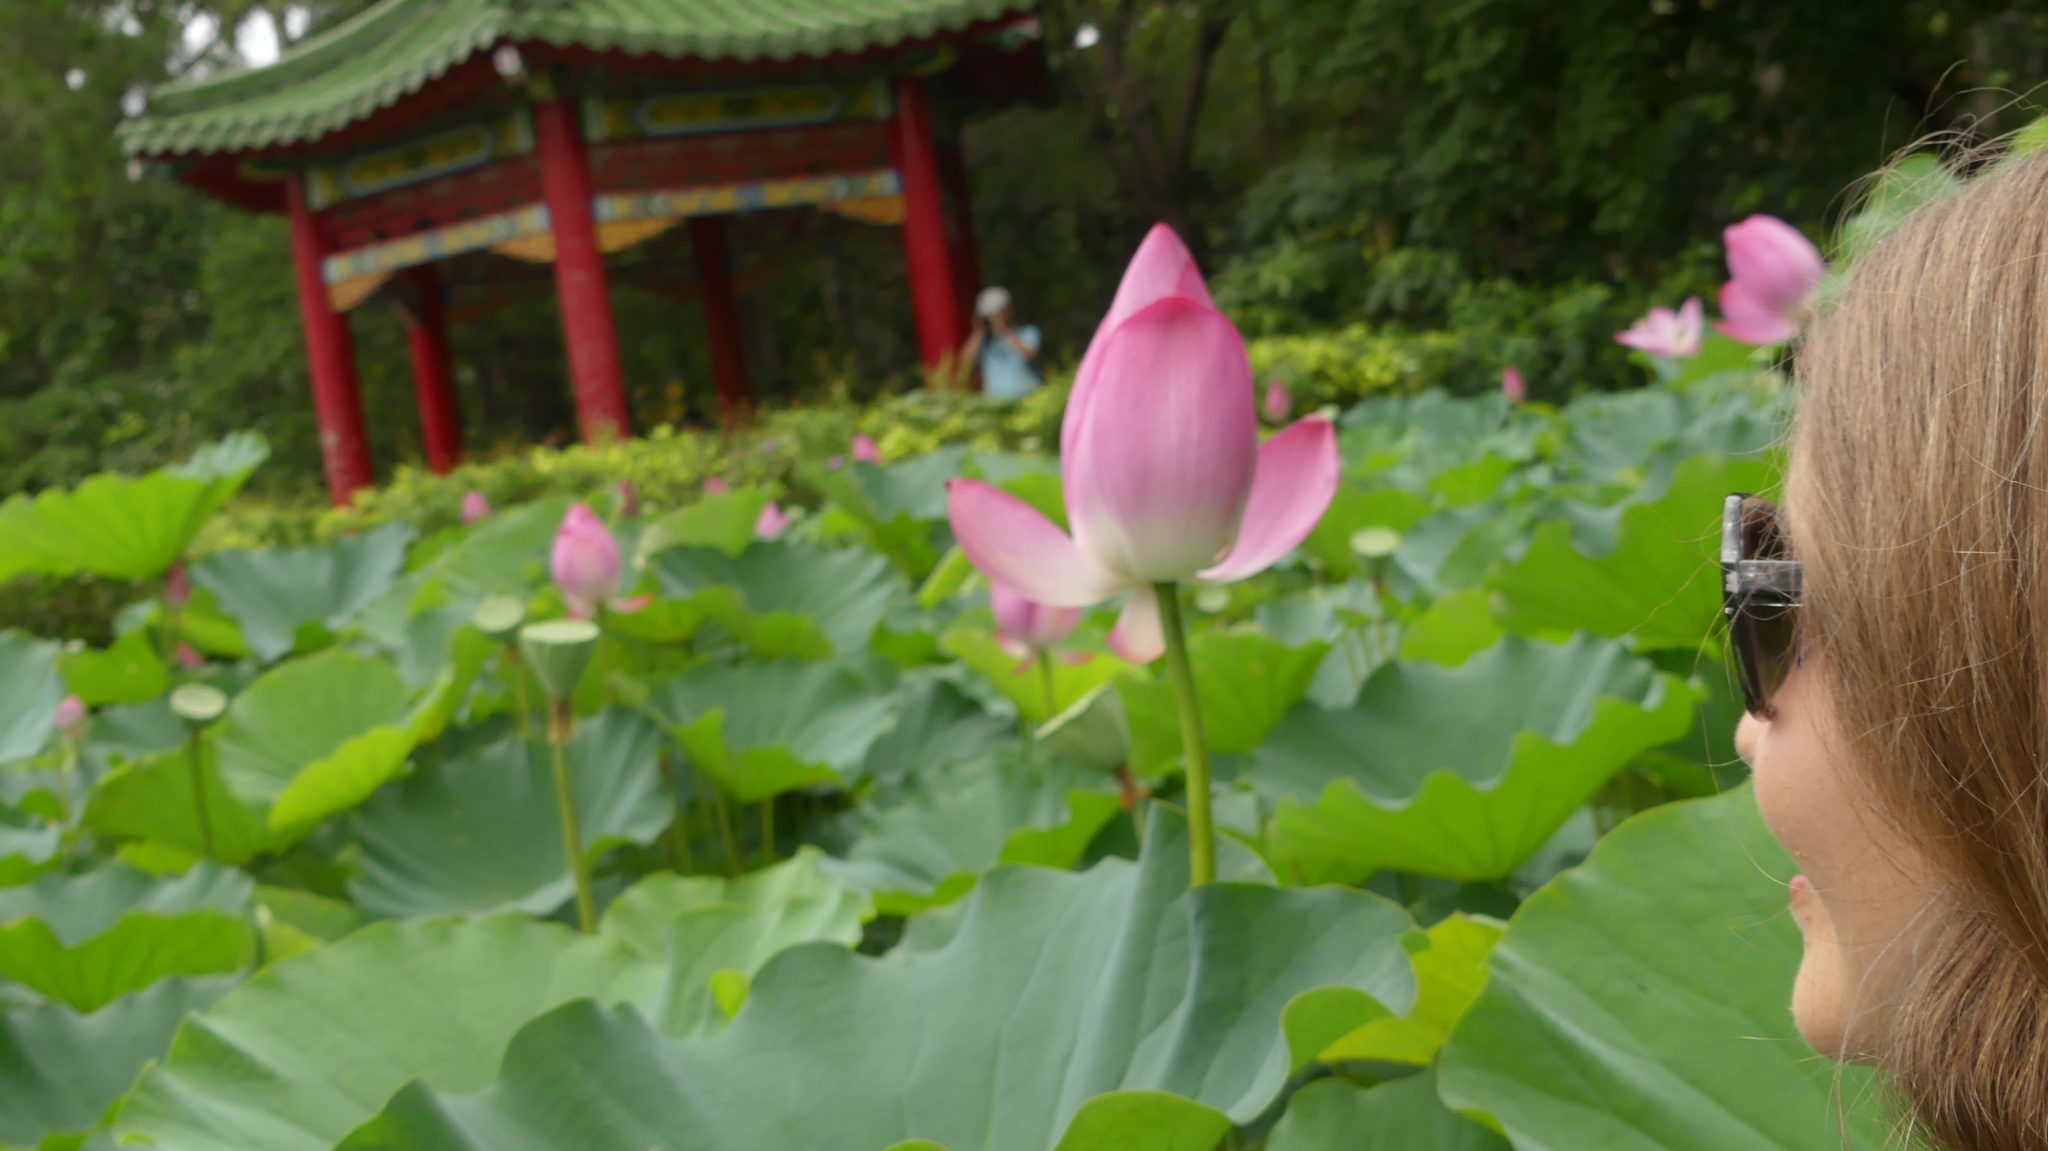 Taipei’s Botanical Garden, Lotus Pond & surrounding attractions